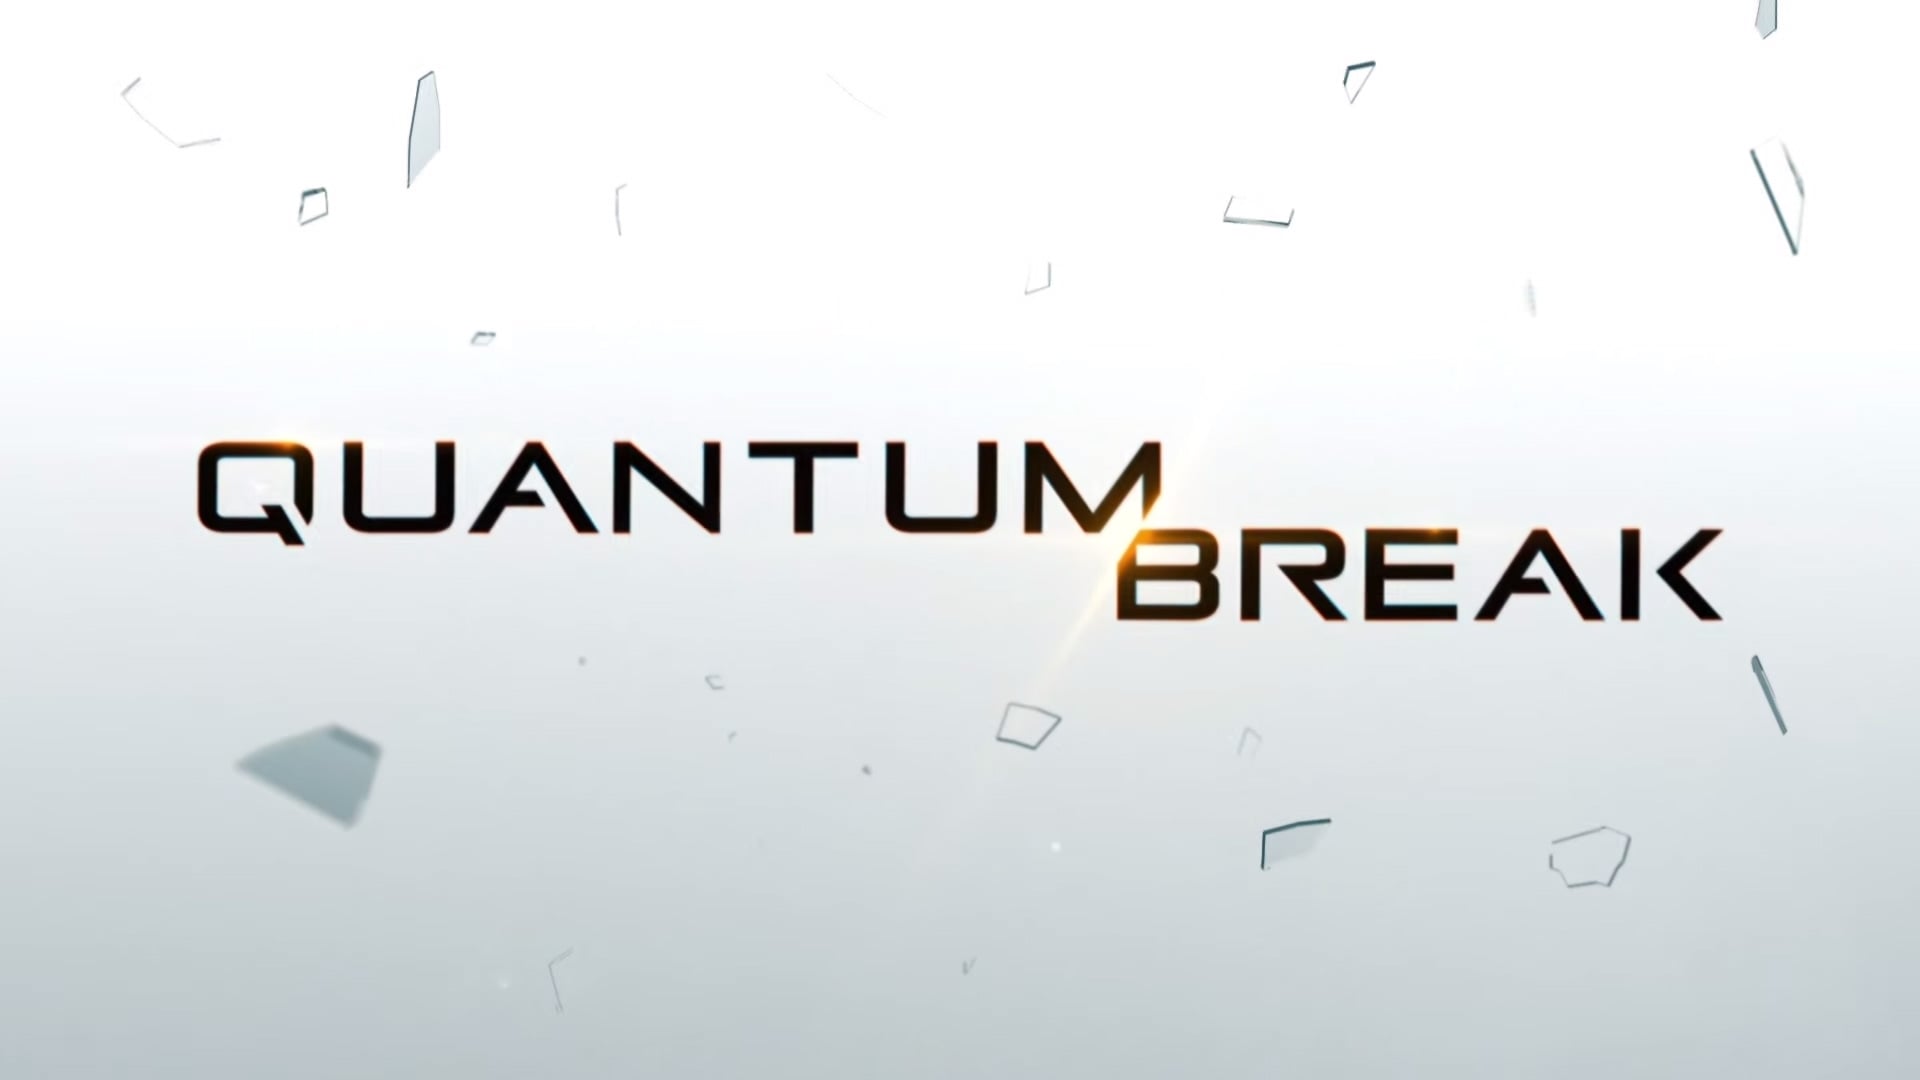 Quantum Break 2016 wallpaper HD Download